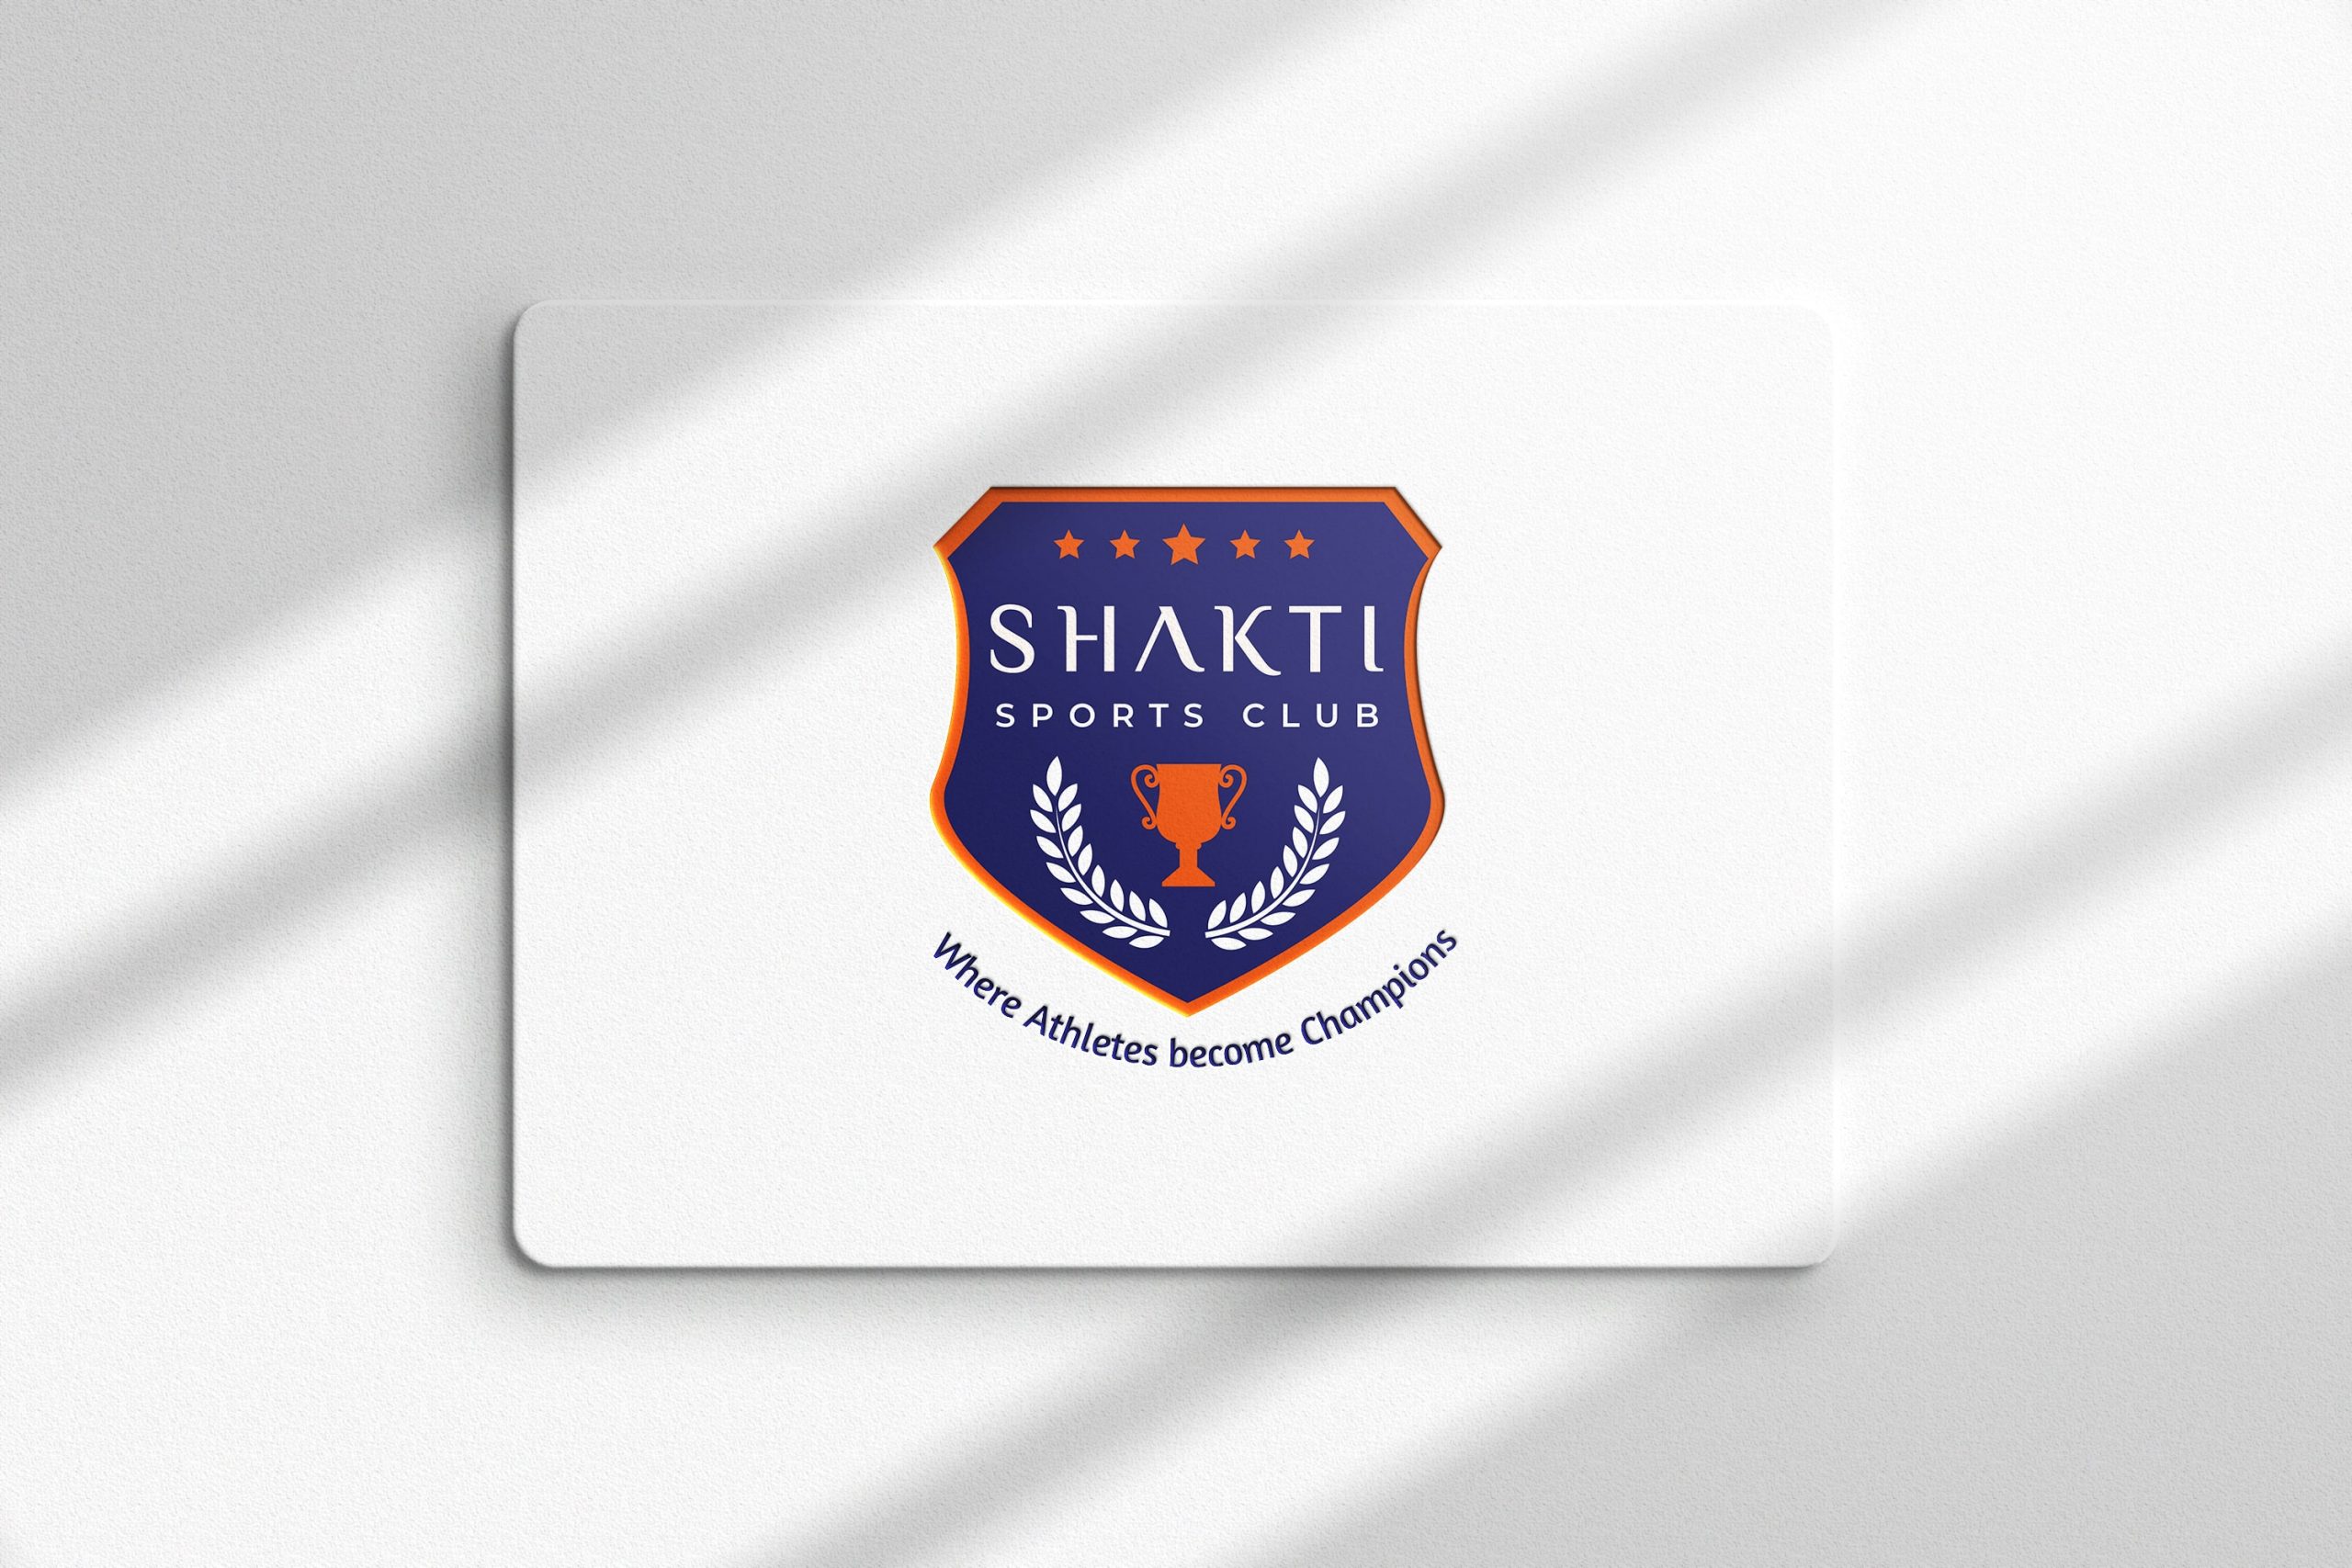 Logo Design Company in India - Shakti Sports Club<br />
